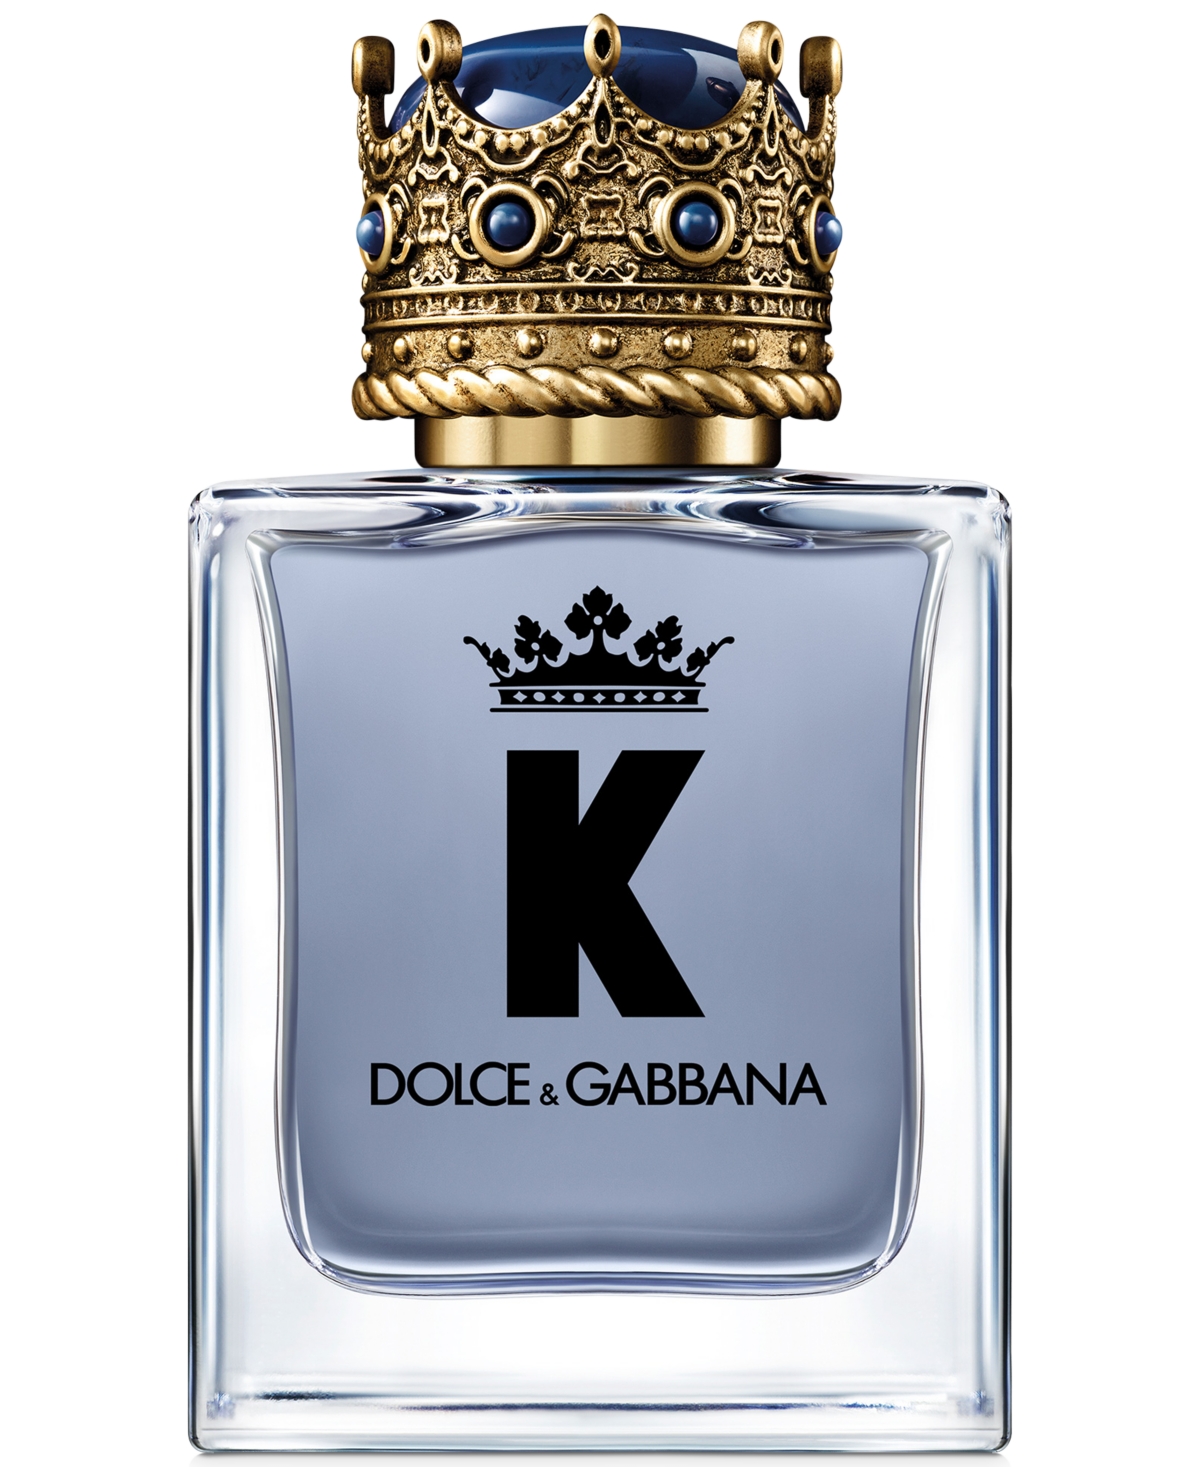 DOLCE&GABBANA K by Dolce&Gabbana Eau de Toilette, 5-oz.